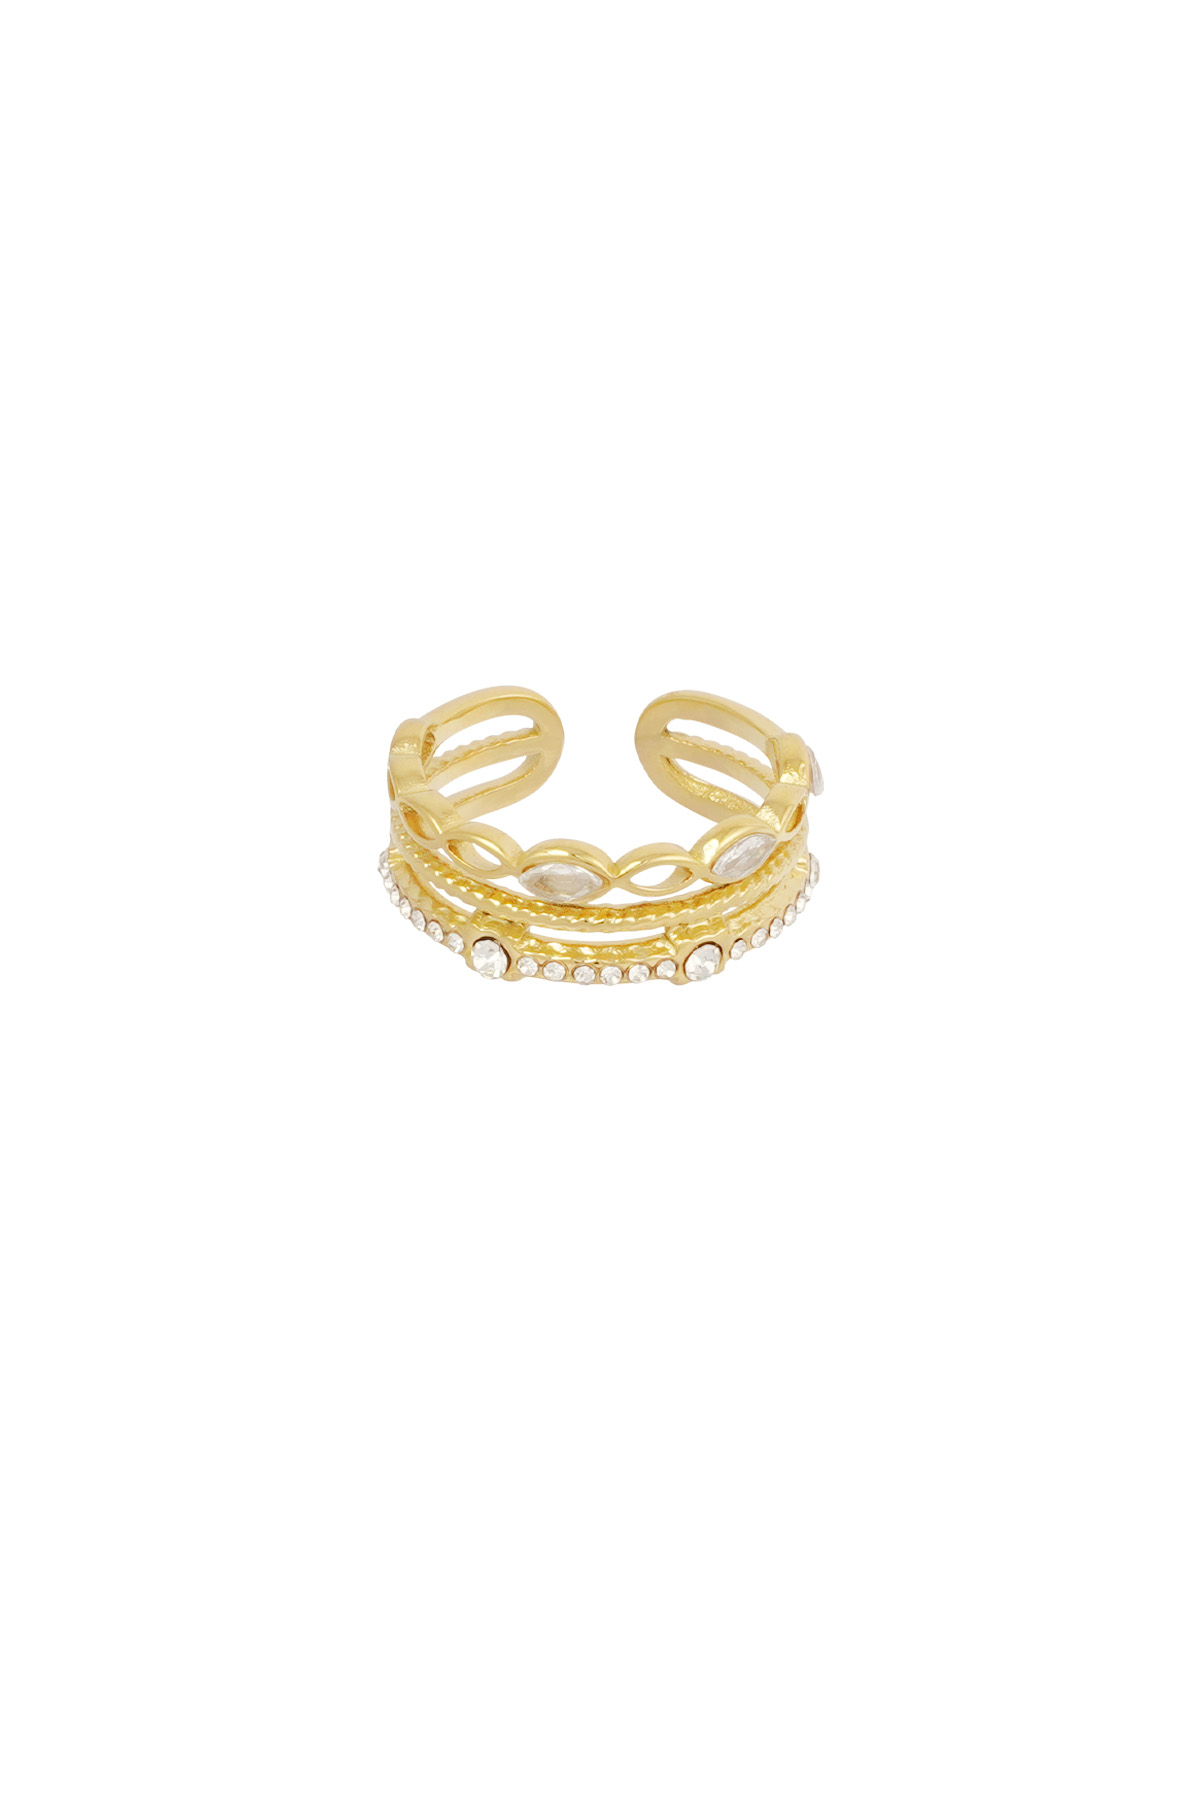 Üçlü aşk yüzüğü - altın  h5 